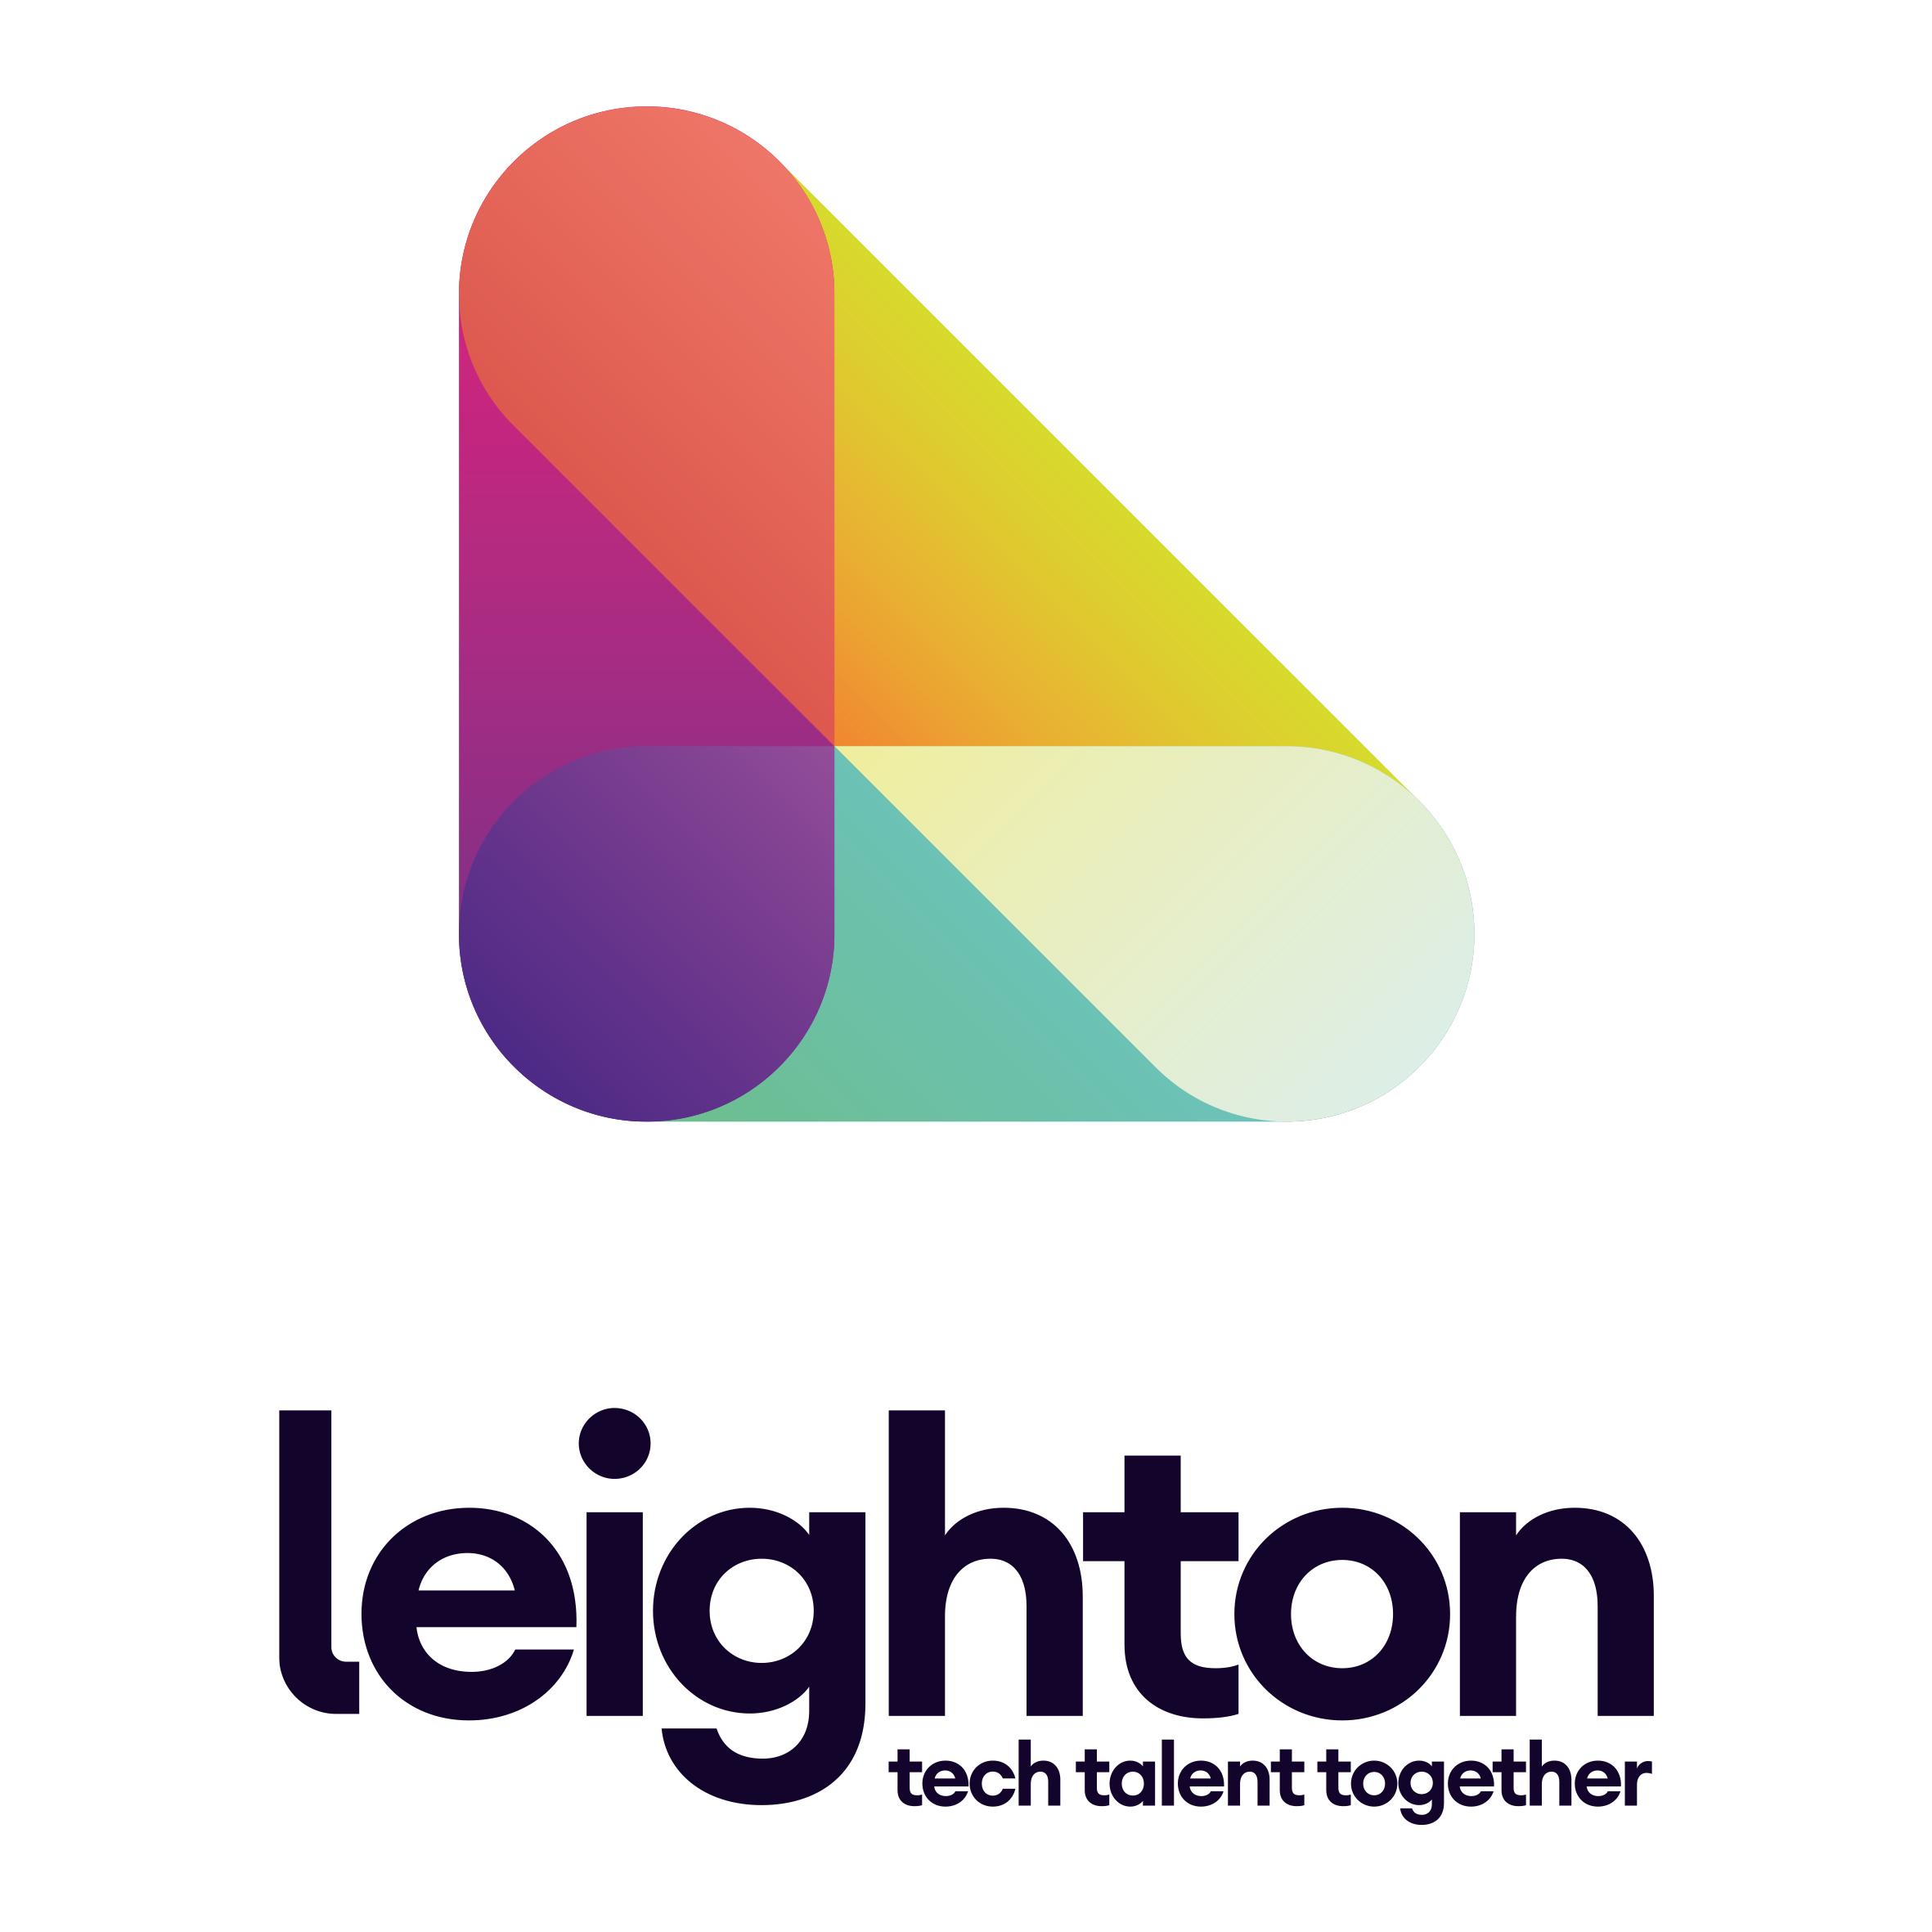 Leighton profile on Qualified.One